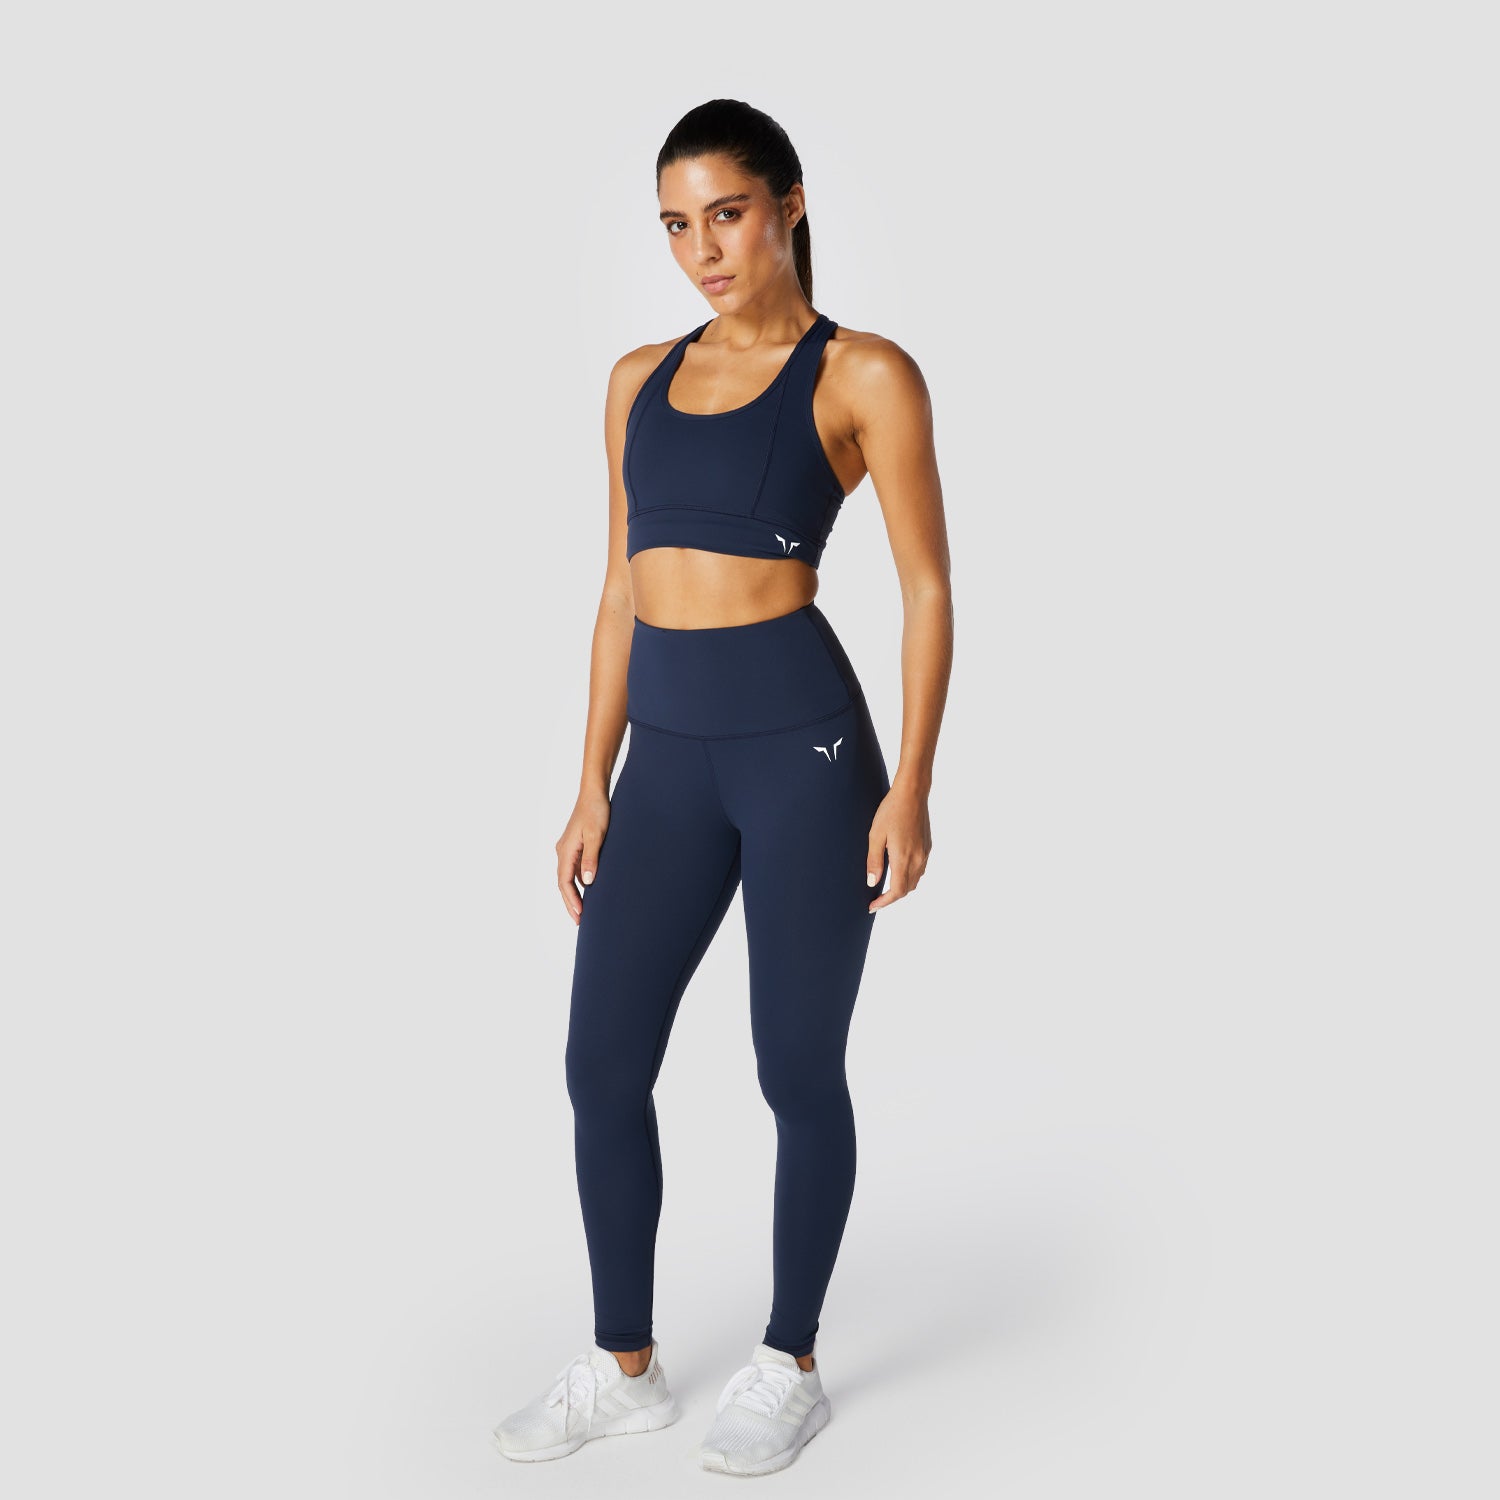 squatwolf-workout-clothes-hera-performance-bra-navy-sports-bra-for-gym